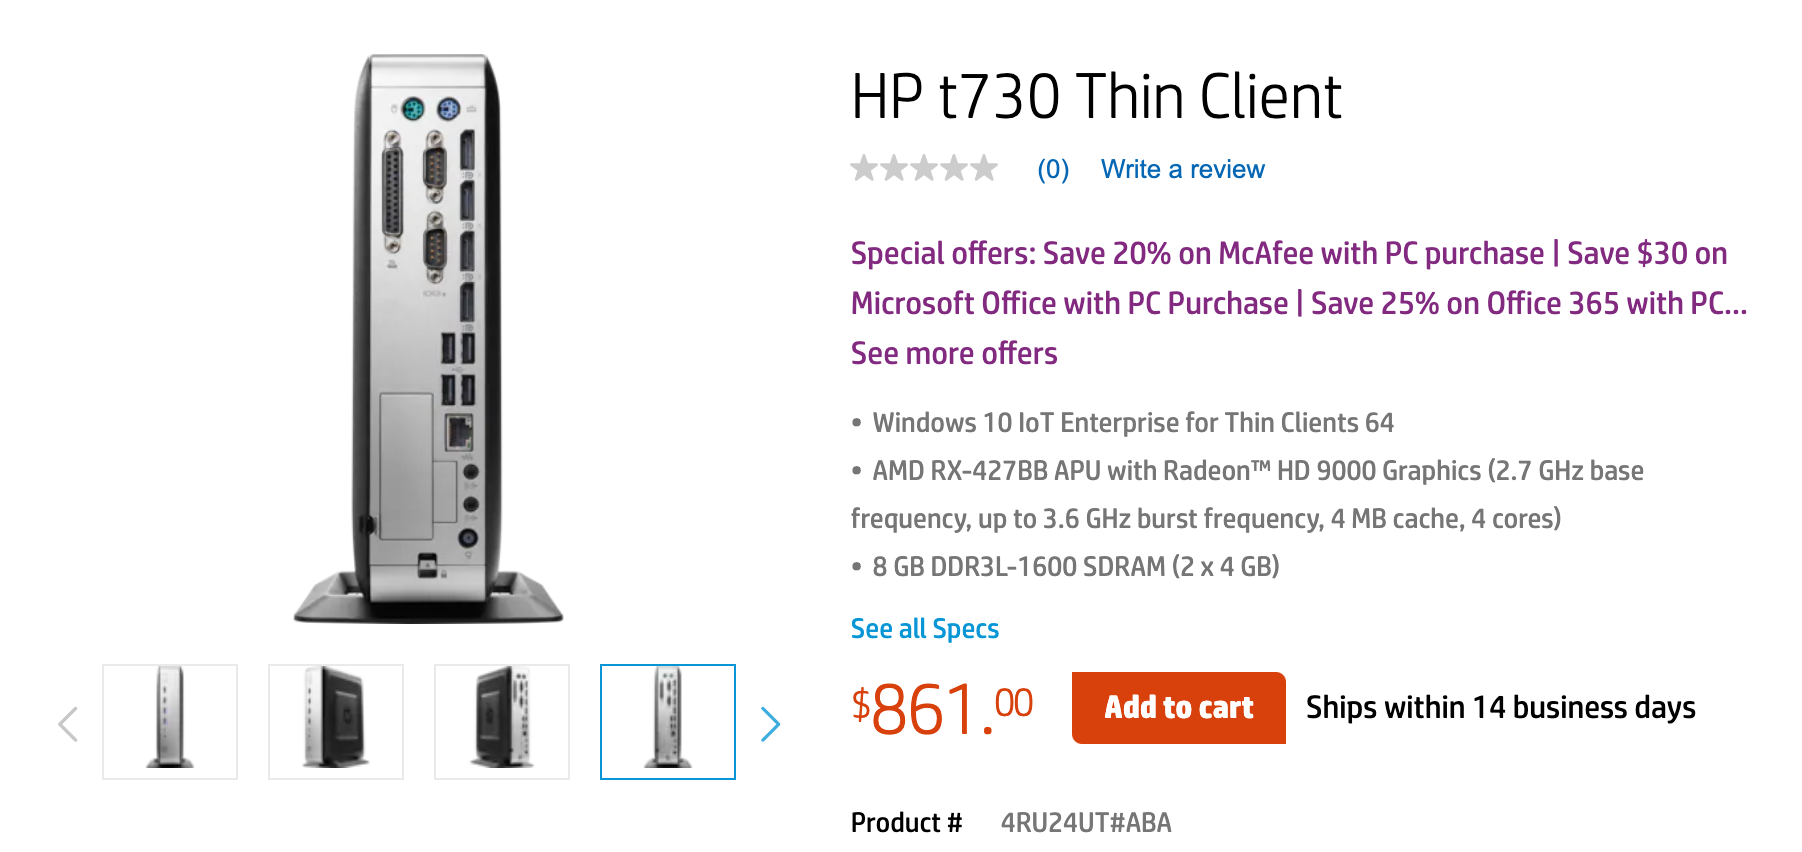 Running pfsense on HP T730 thin client